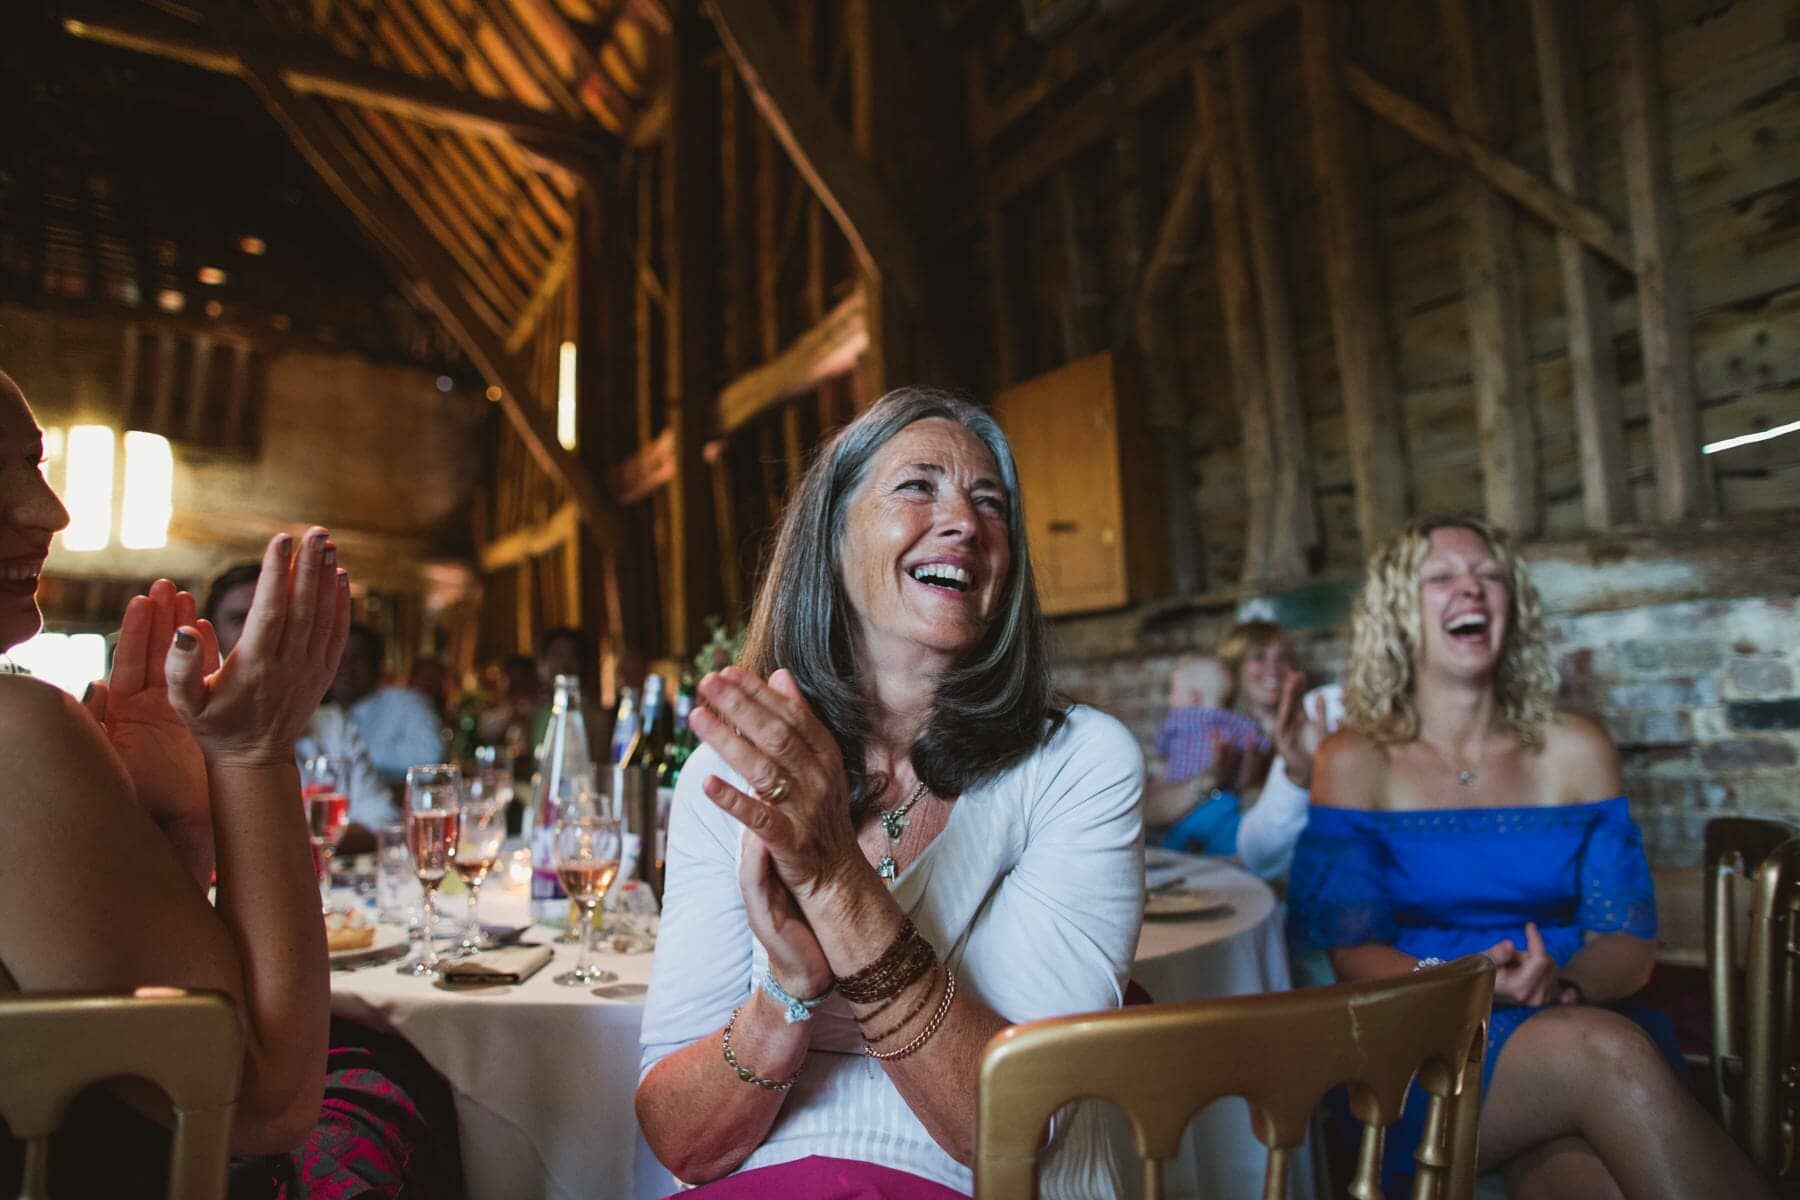 Suffolk Barn wedding photography speeches